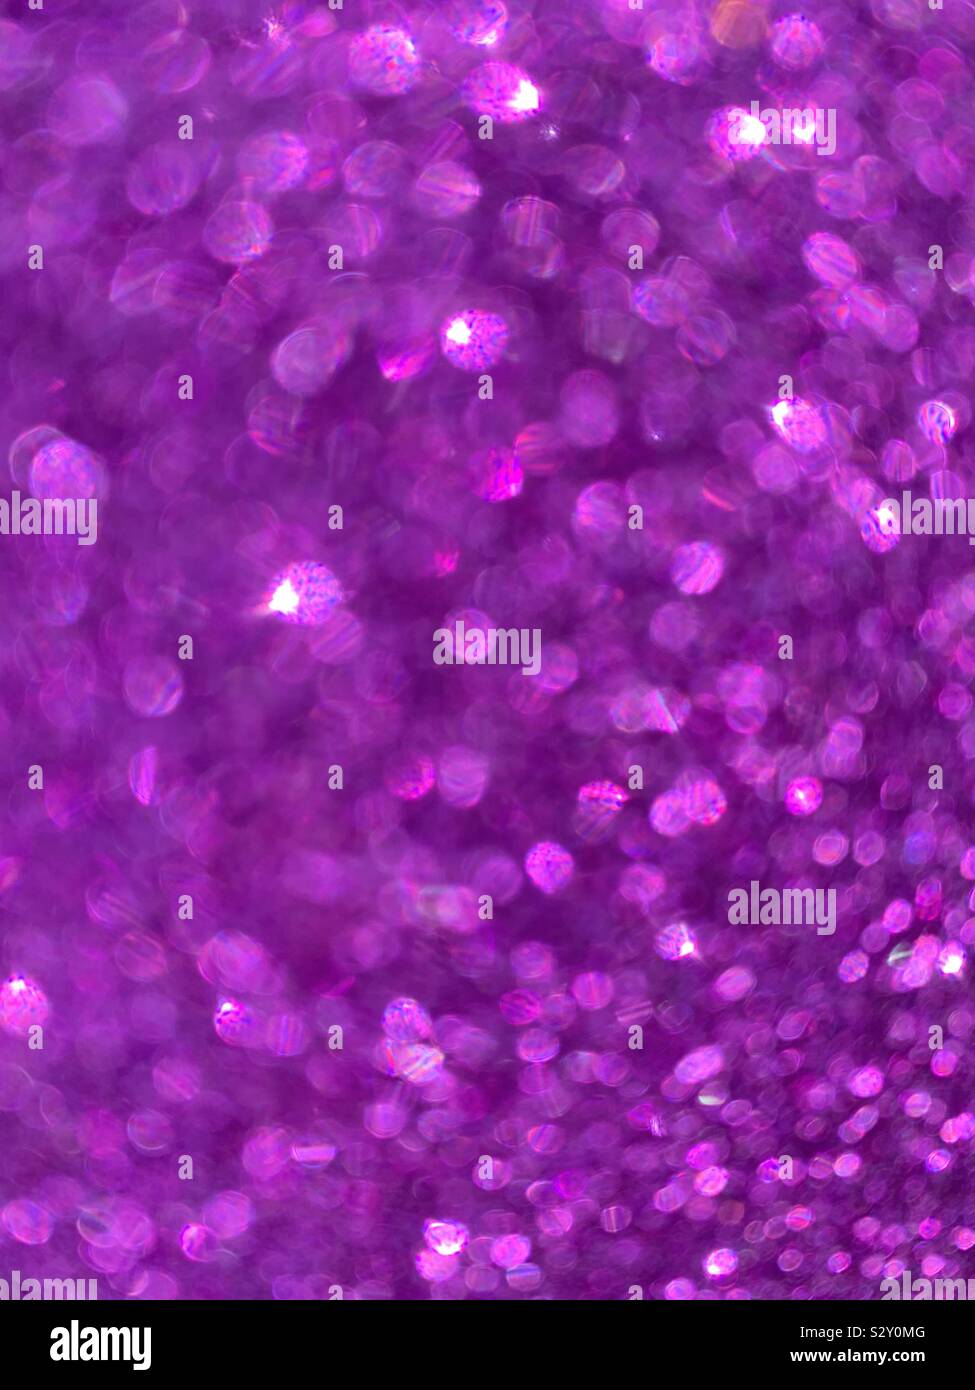 Abstract, purple glitter background Stock Photo